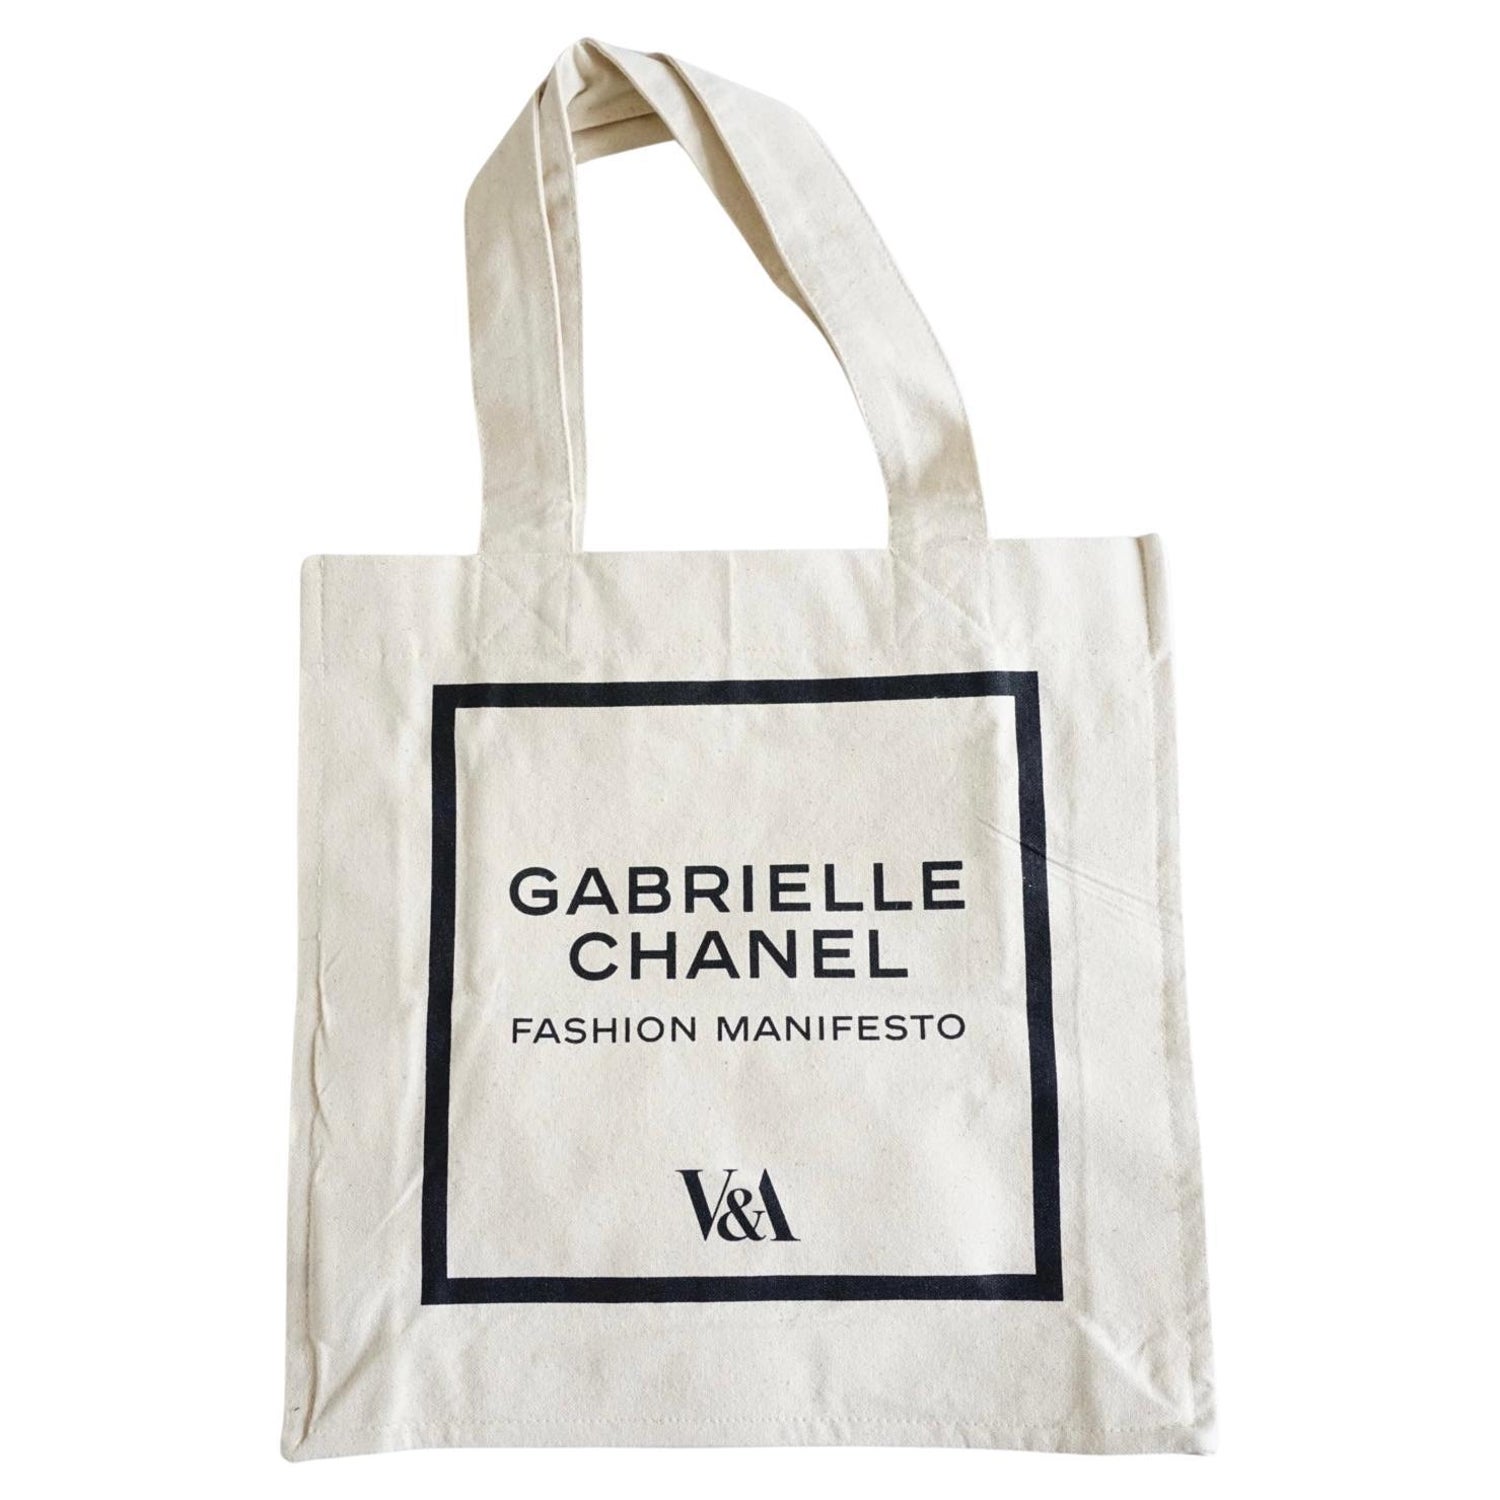 chanel gabrielle bag discontinued